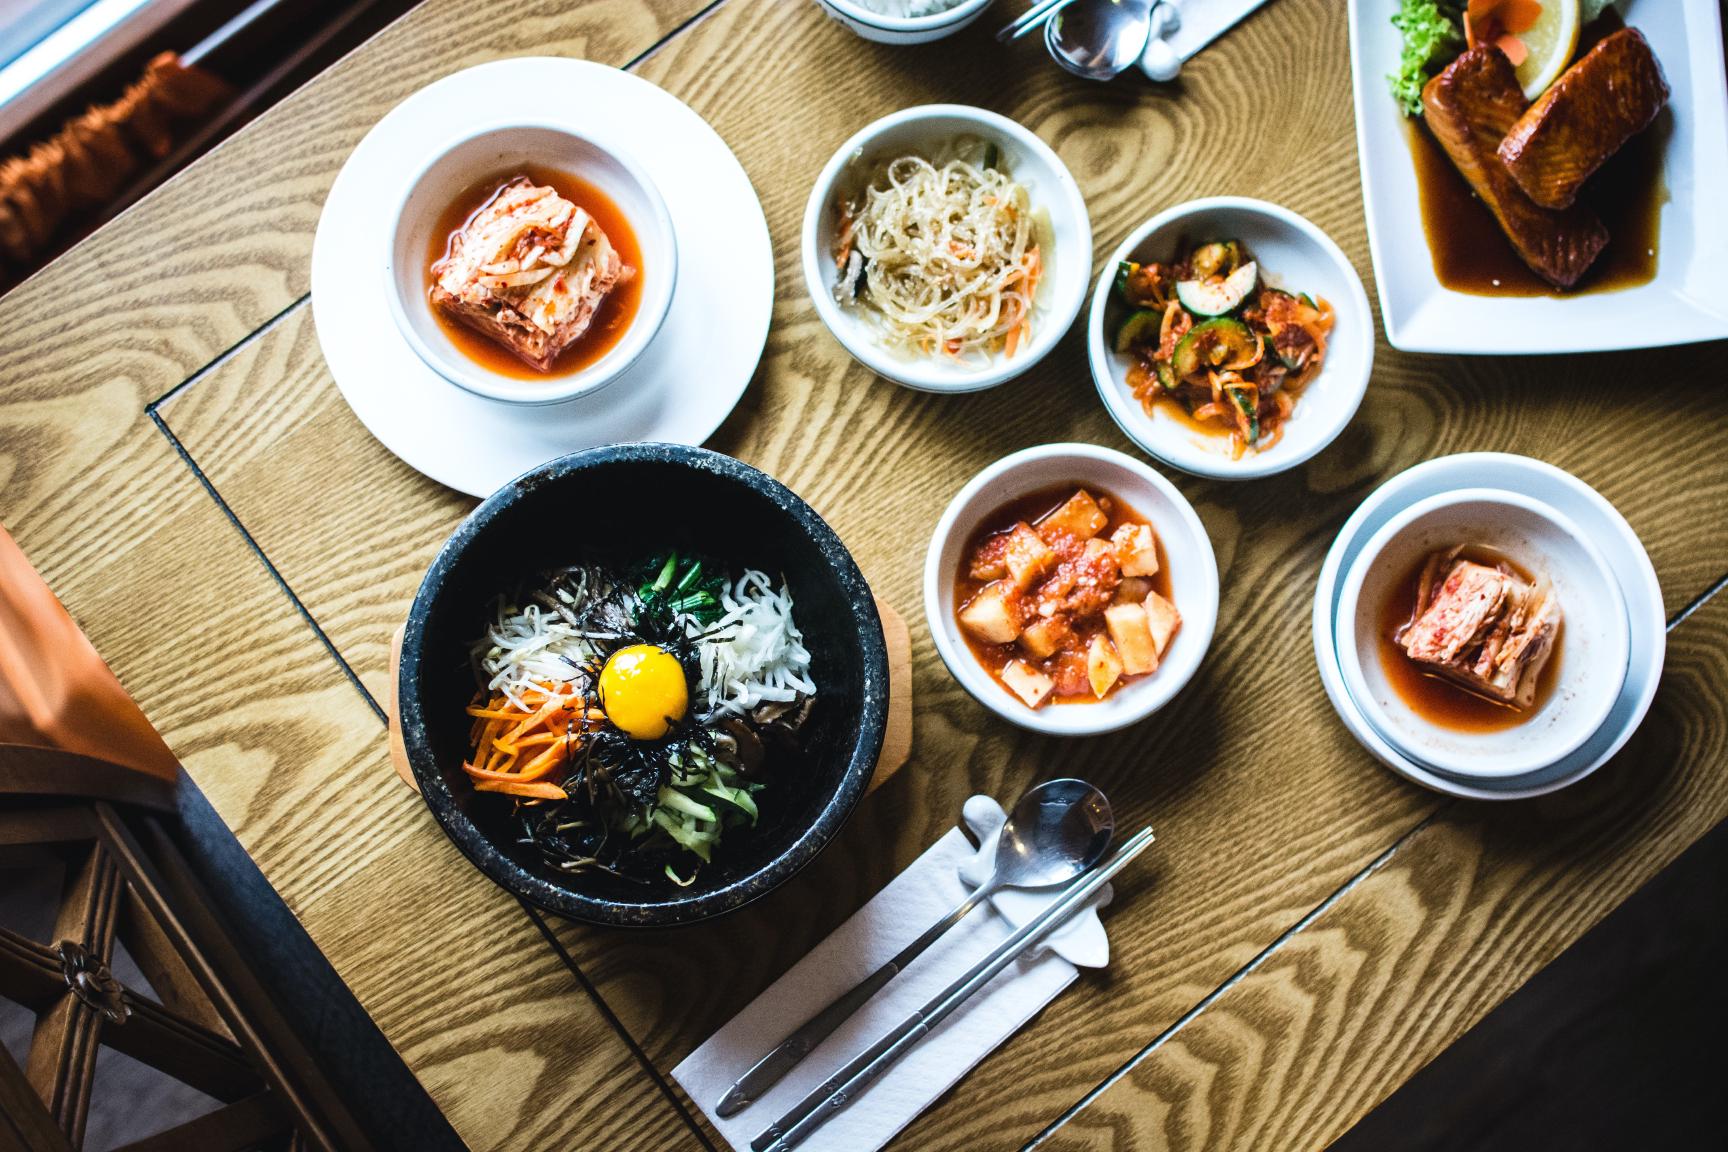 images/post/korean-food-table.jpg